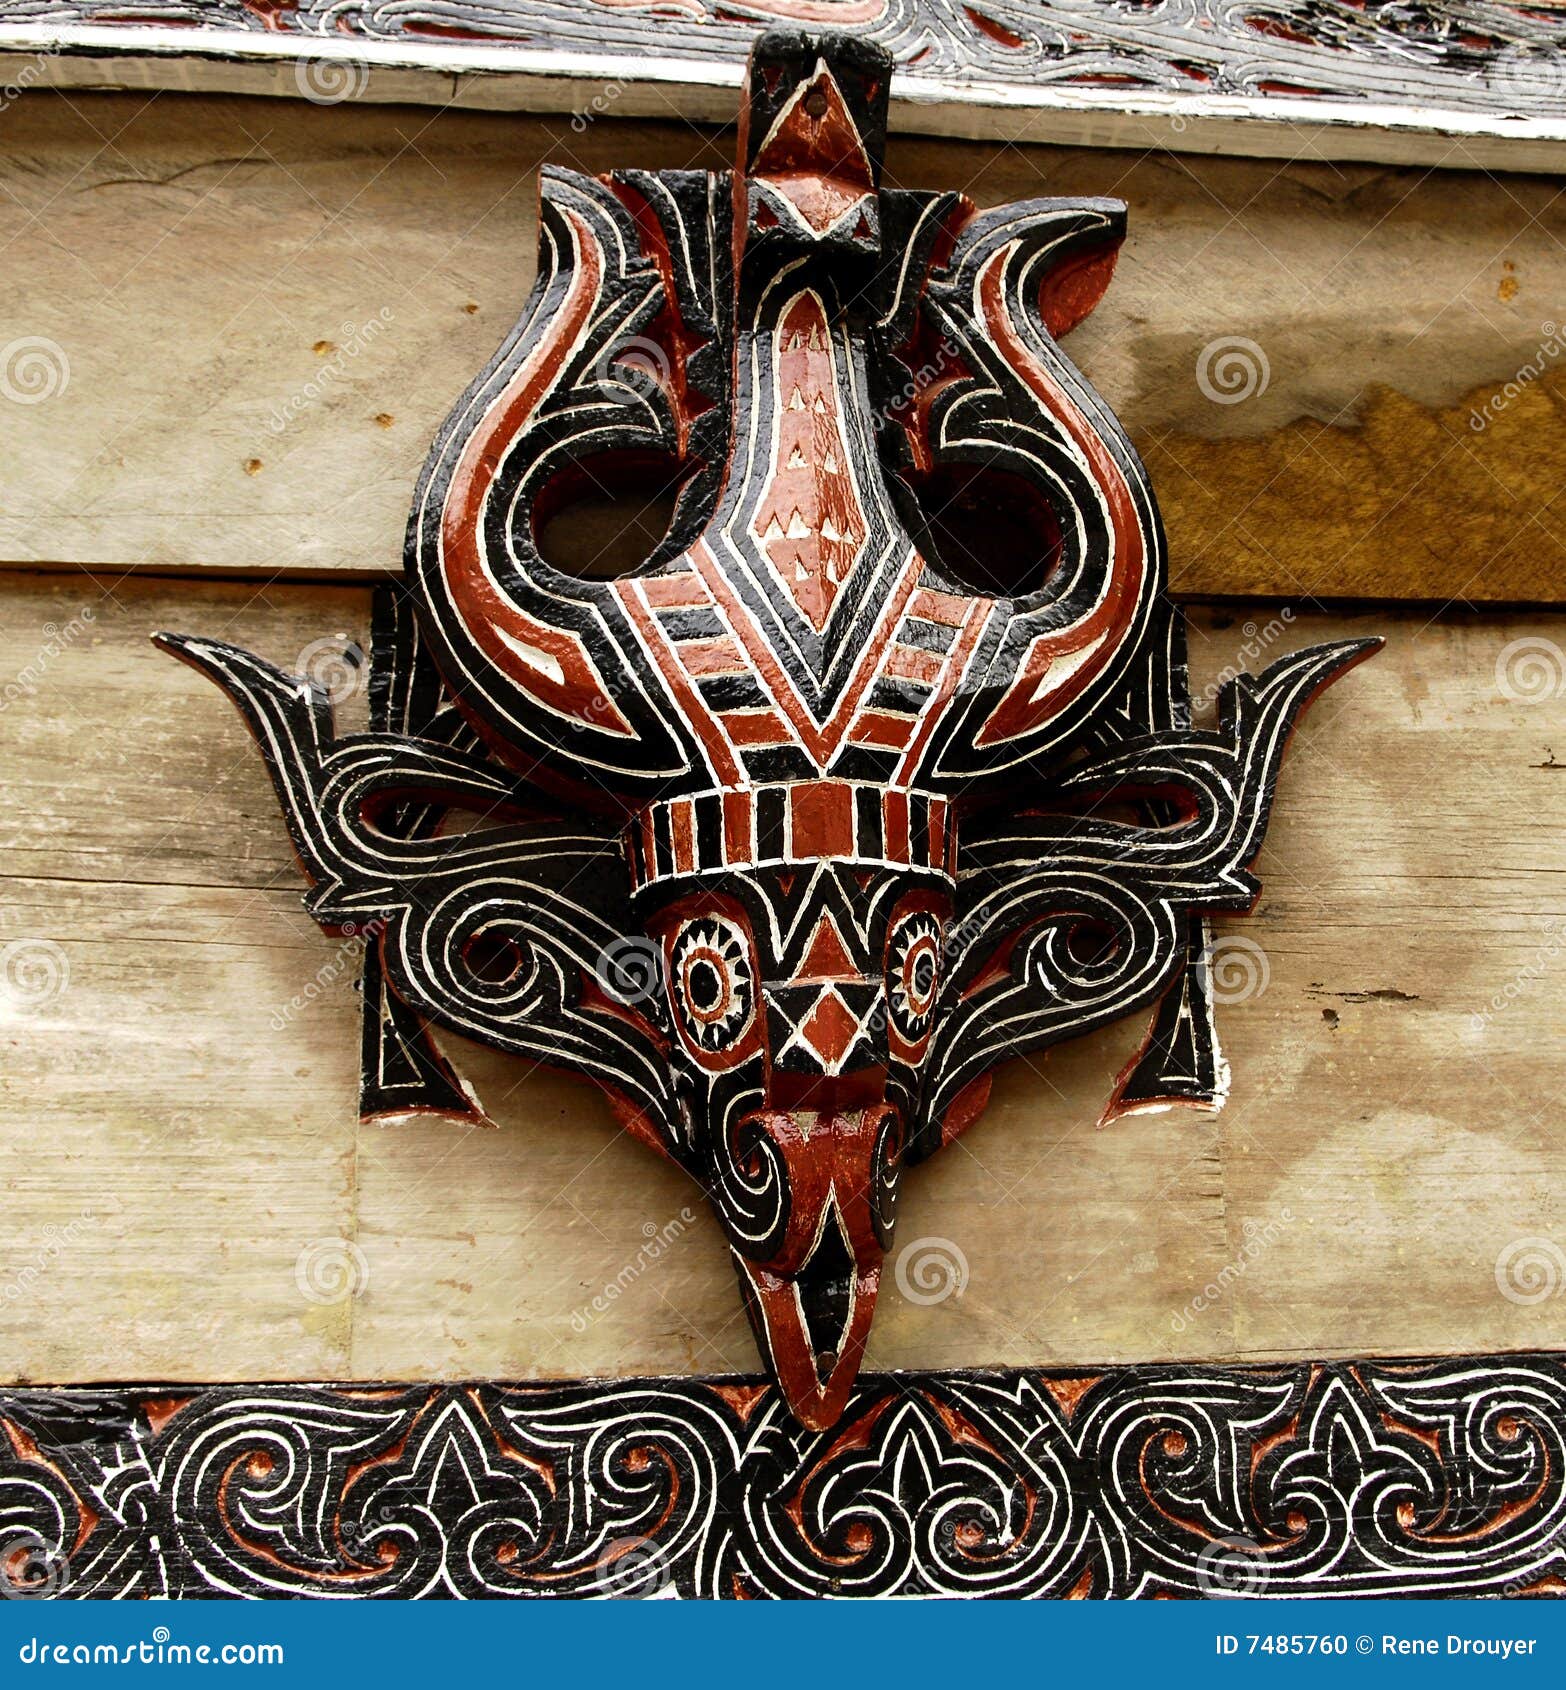  Batak  s House Ornament  In Sumatra Stock Photo Image of 